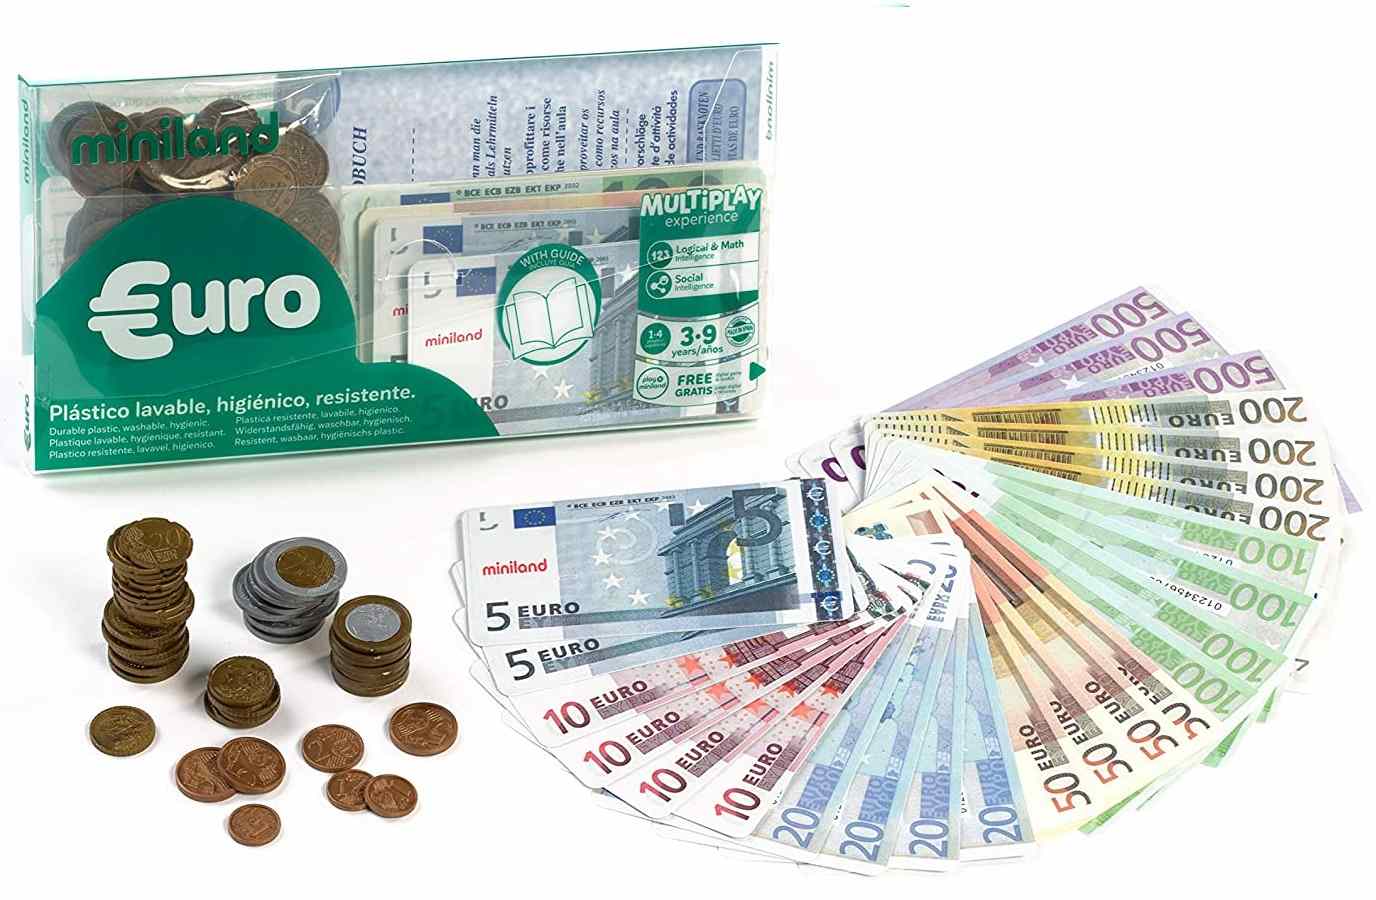 Miniland euro